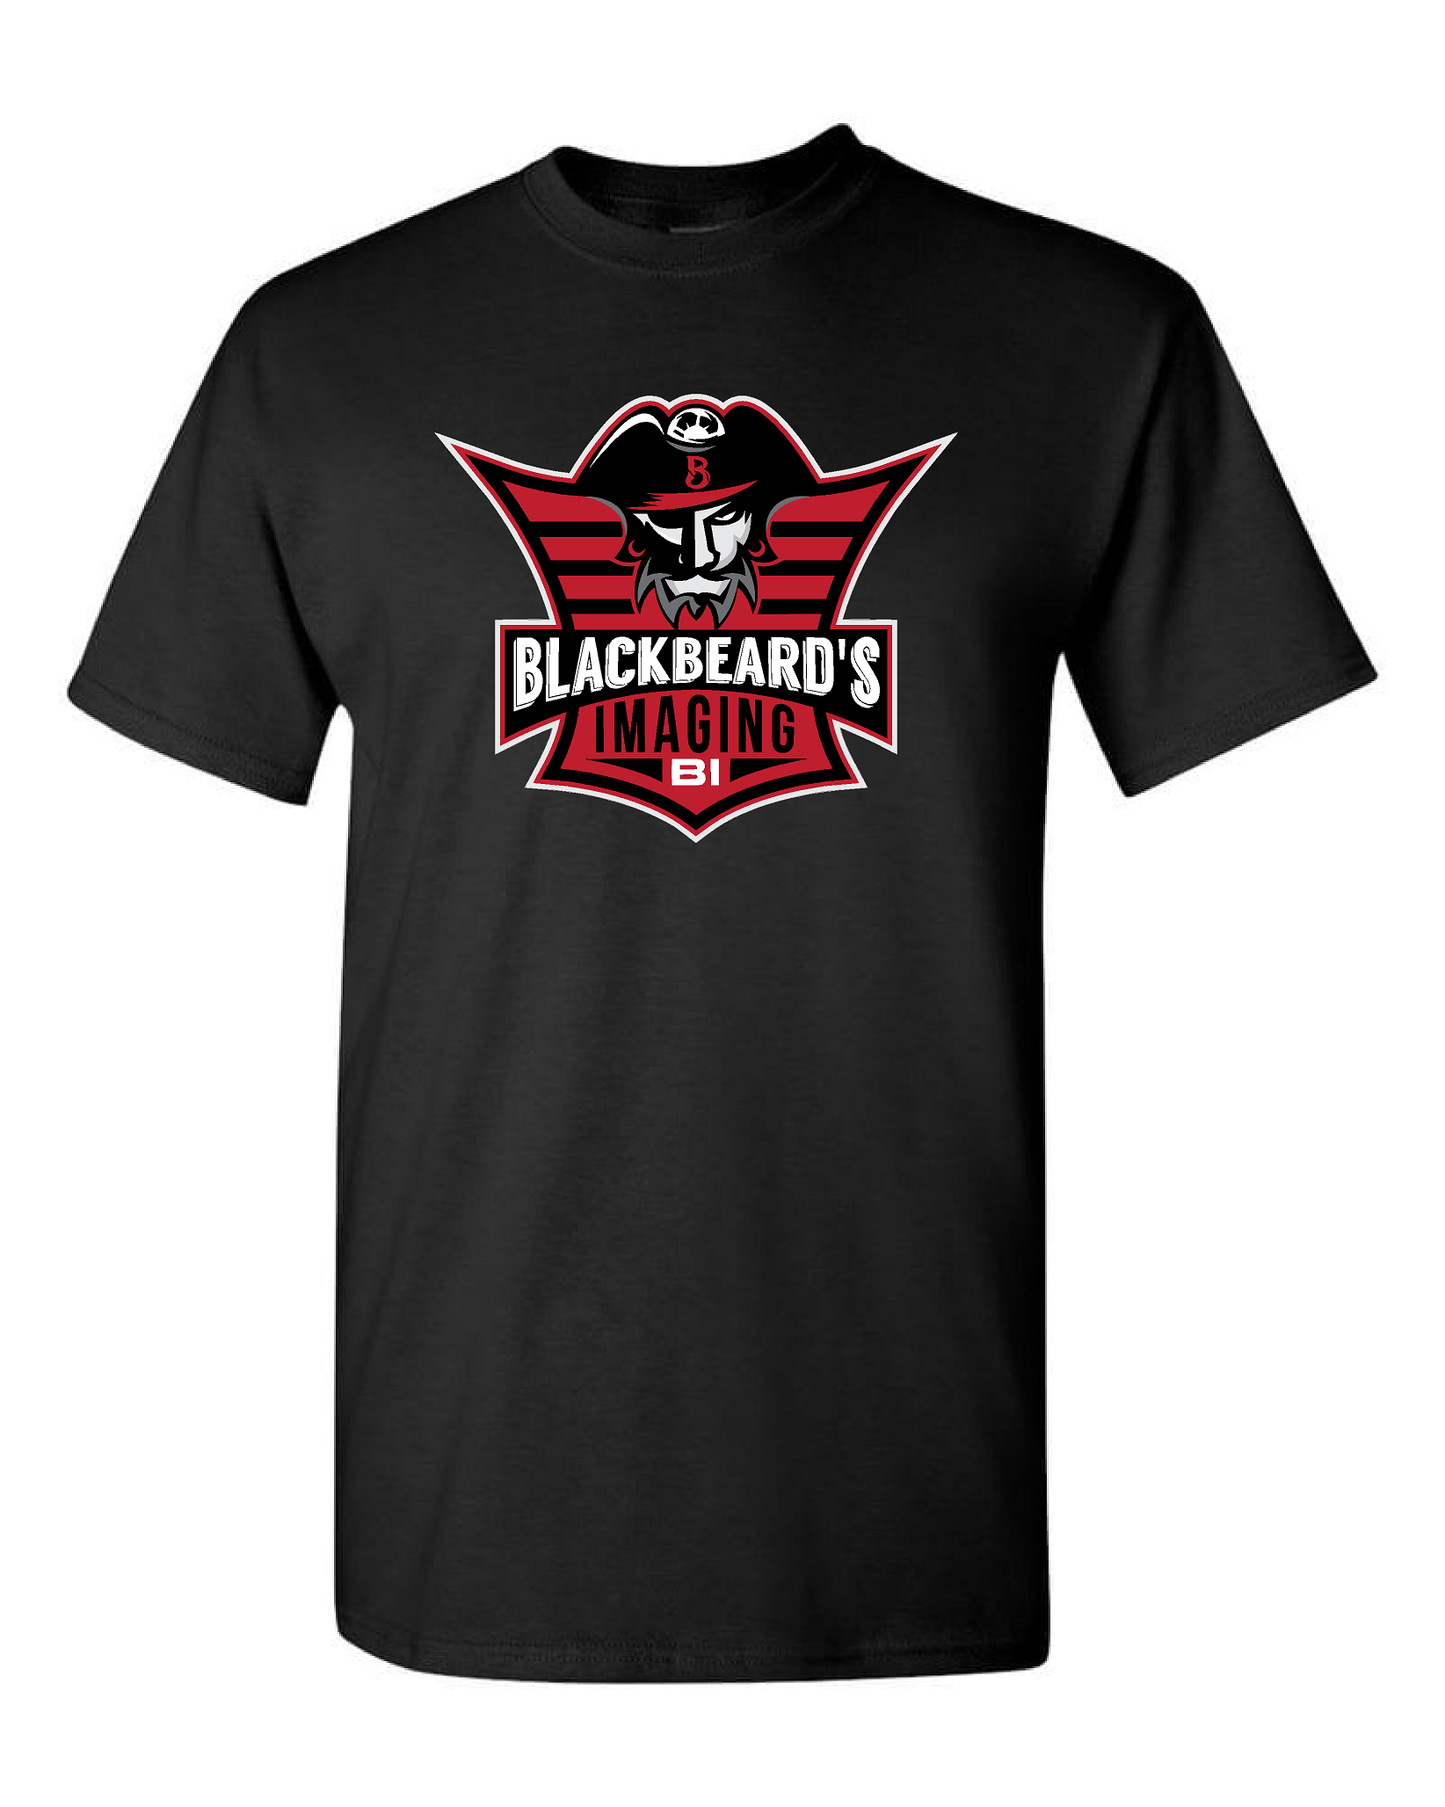 Blackbeard's Imaging T-Shirts